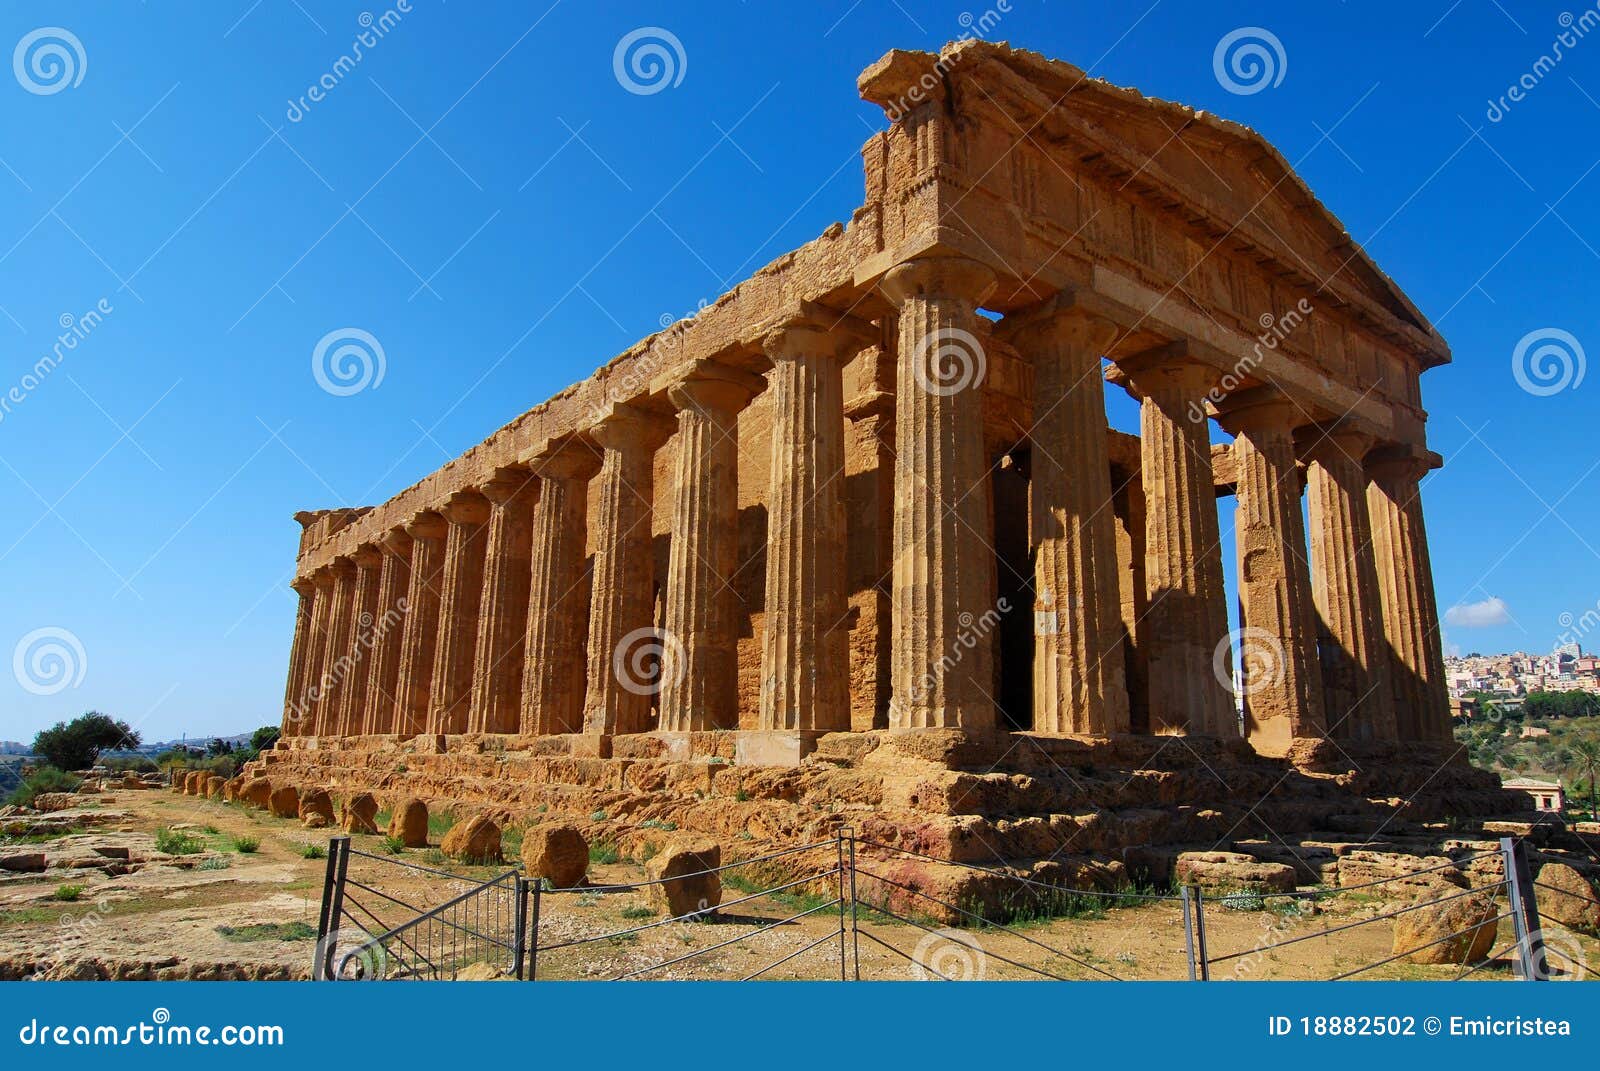 greek temple of concordia in agrigento, sicily